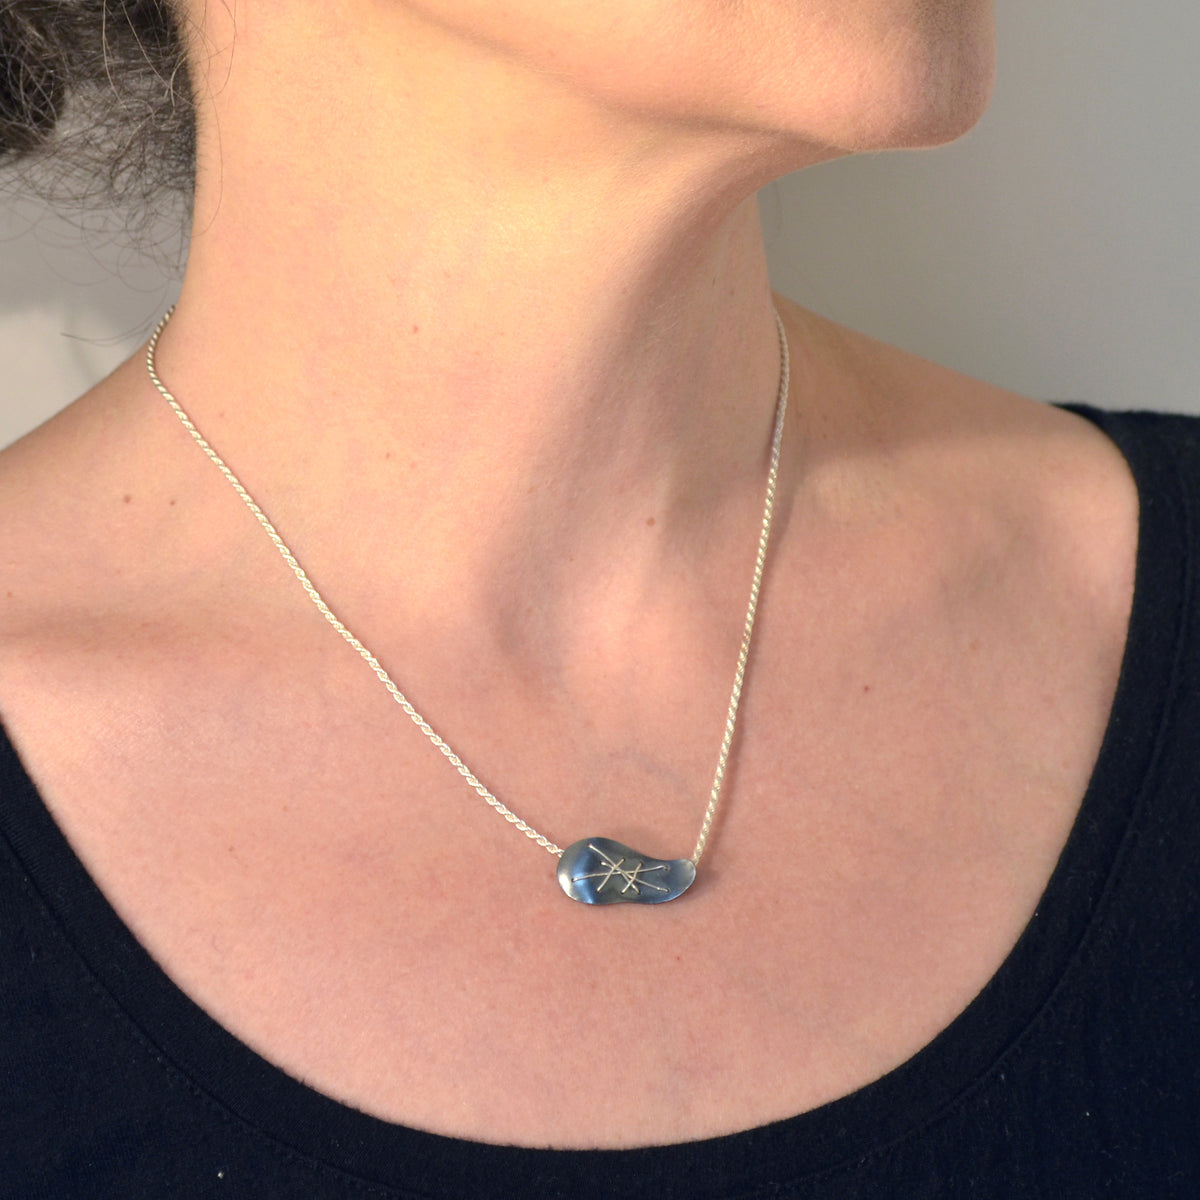 Suzanne Schwartz wearing Single Cascade Necklace pendant on chain - horizontal